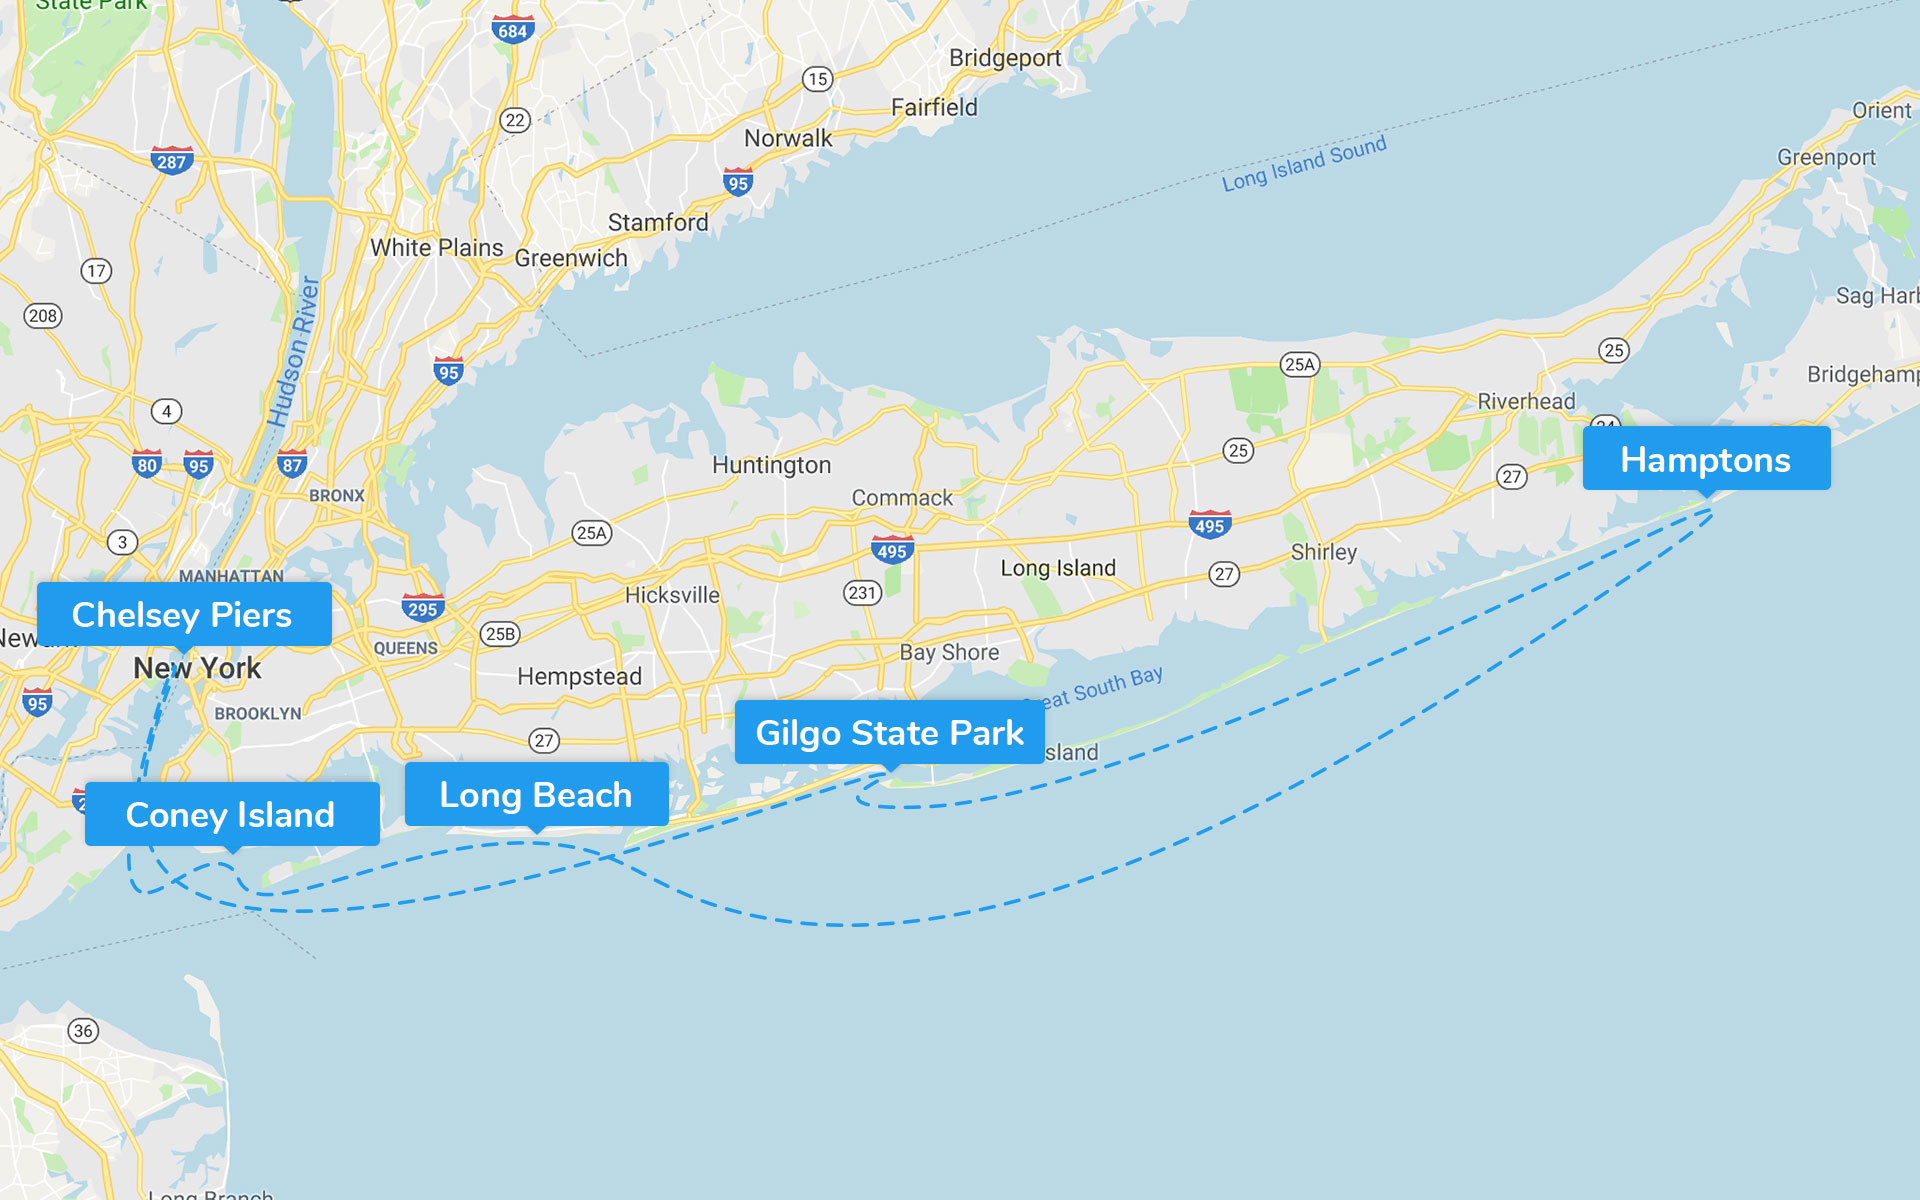 NYC - The Hamptons (3days) itinerary